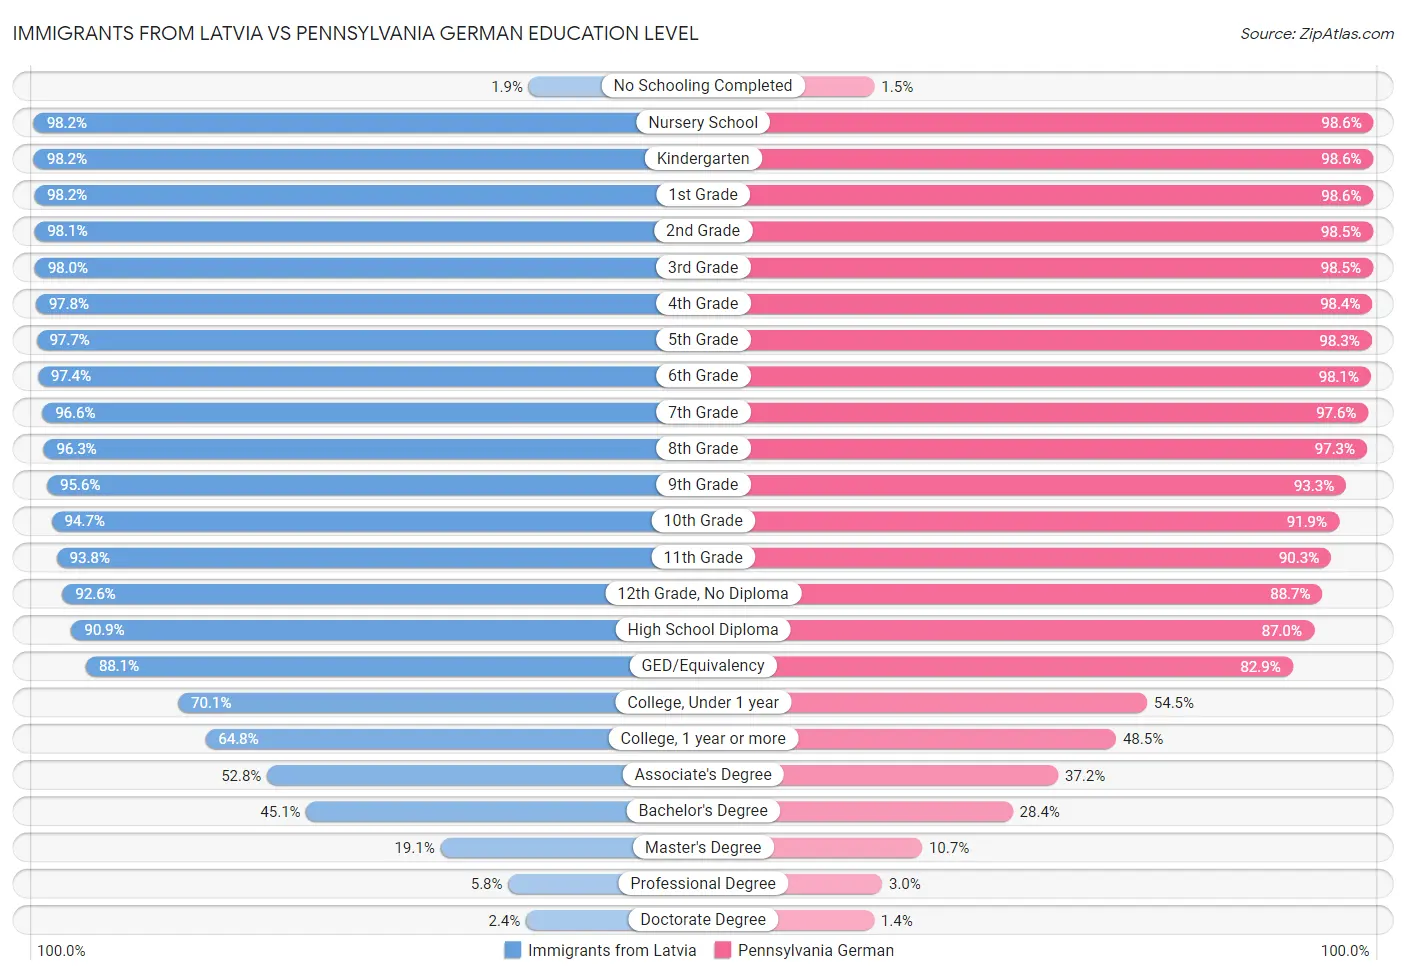 Immigrants from Latvia vs Pennsylvania German Education Level